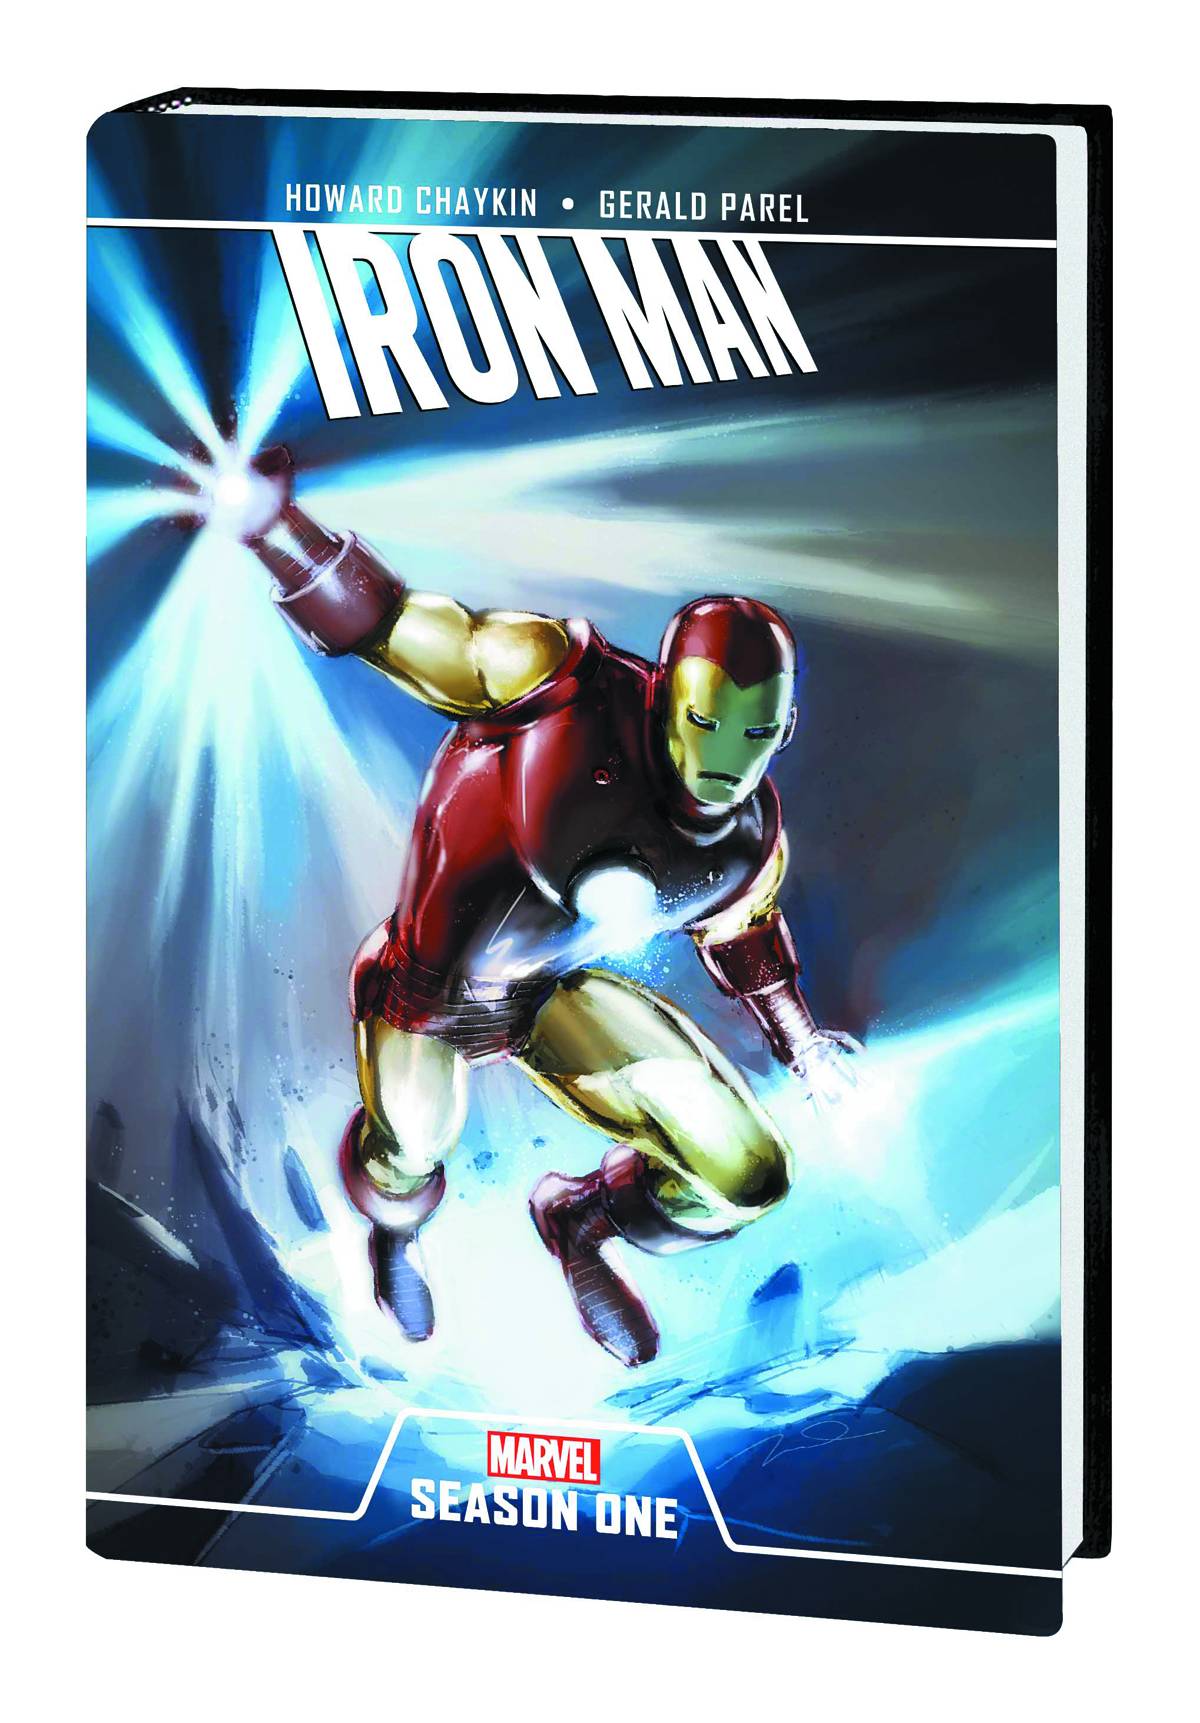 Iron Man Season One Hardcover Graphic Novel